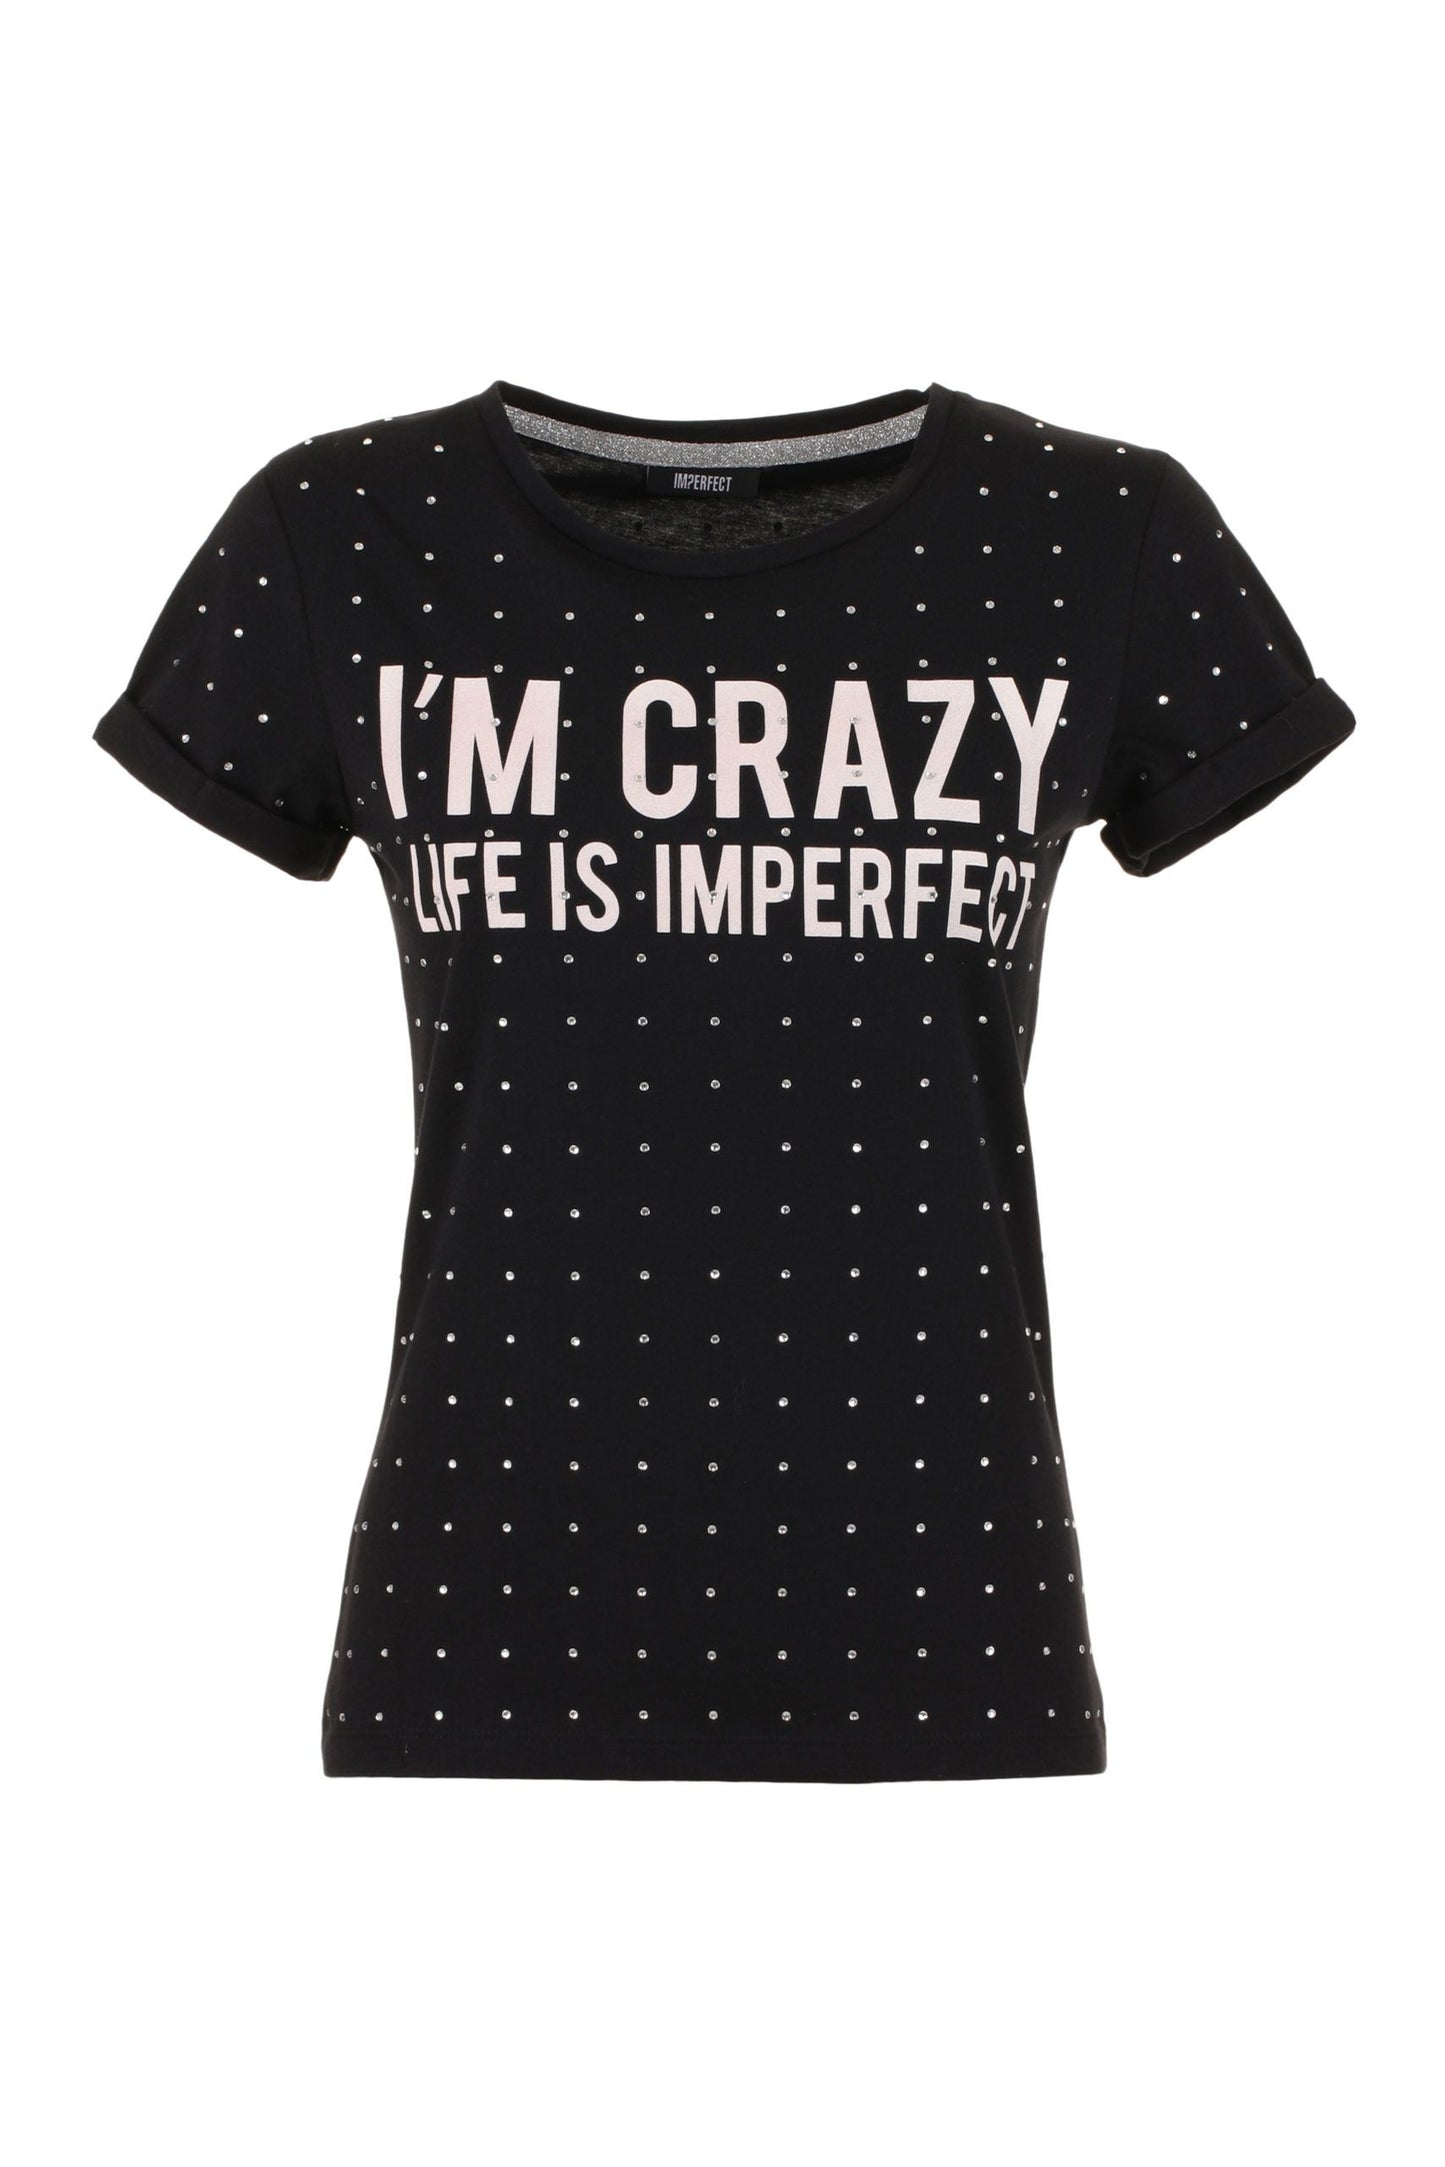 Nero Imperfect Women's Cotton Print T-Shirt